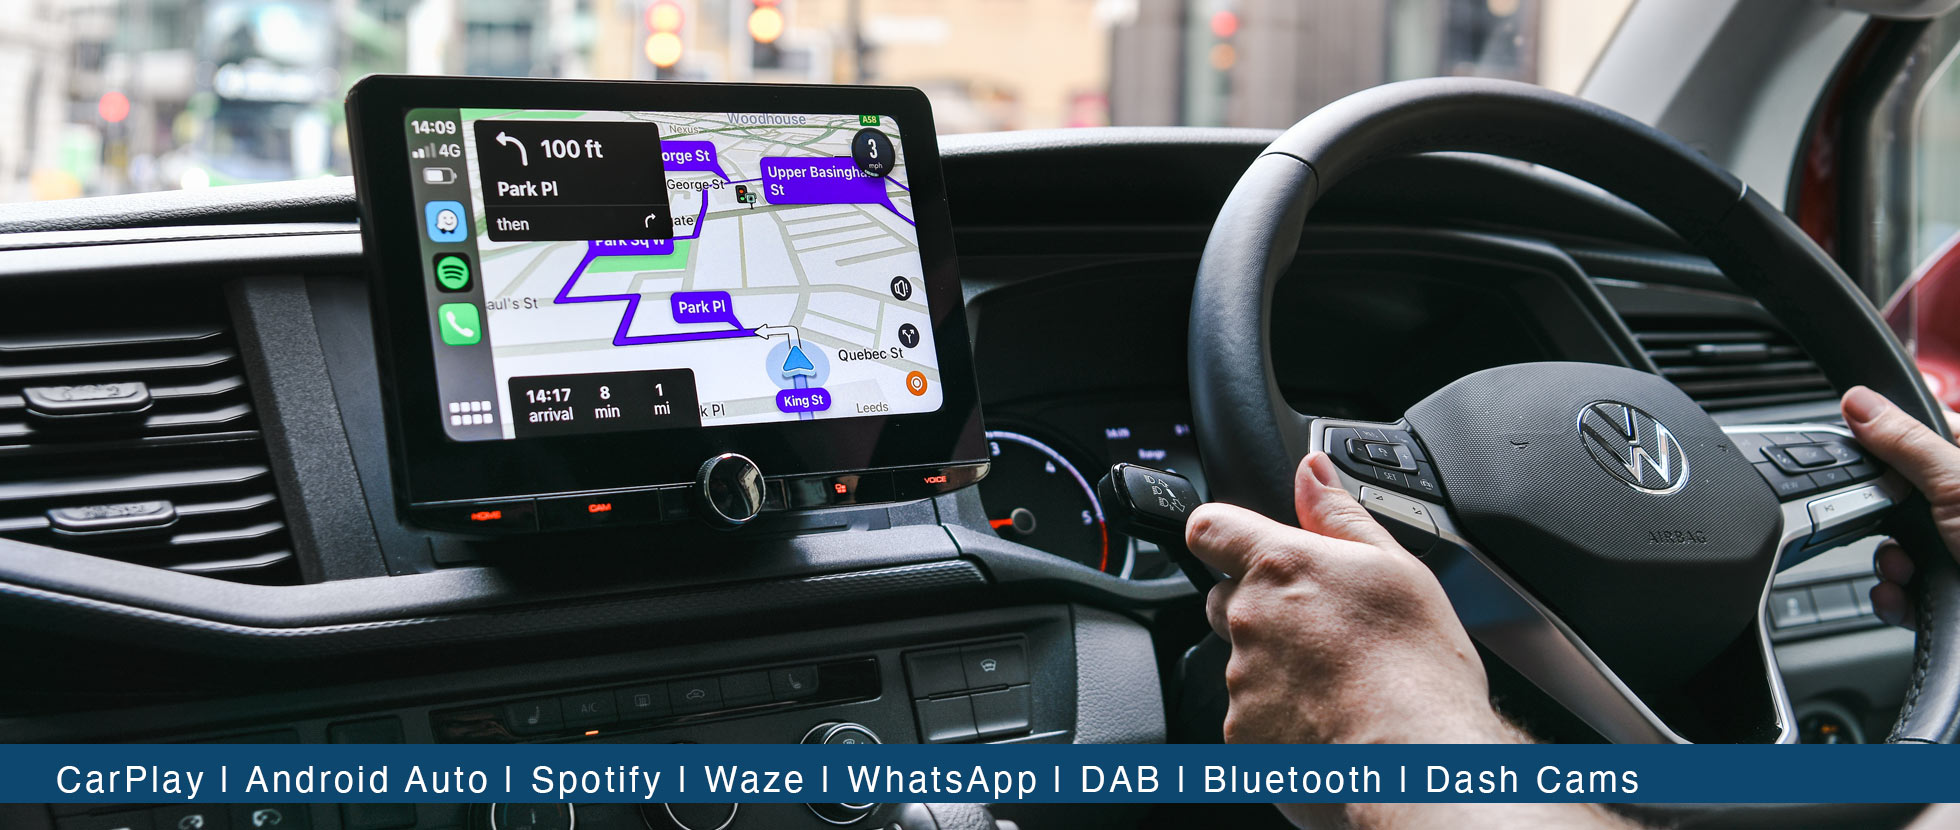 Autoradio Navigation pour VW SEAT Skoda, Carplay, Android, DAB